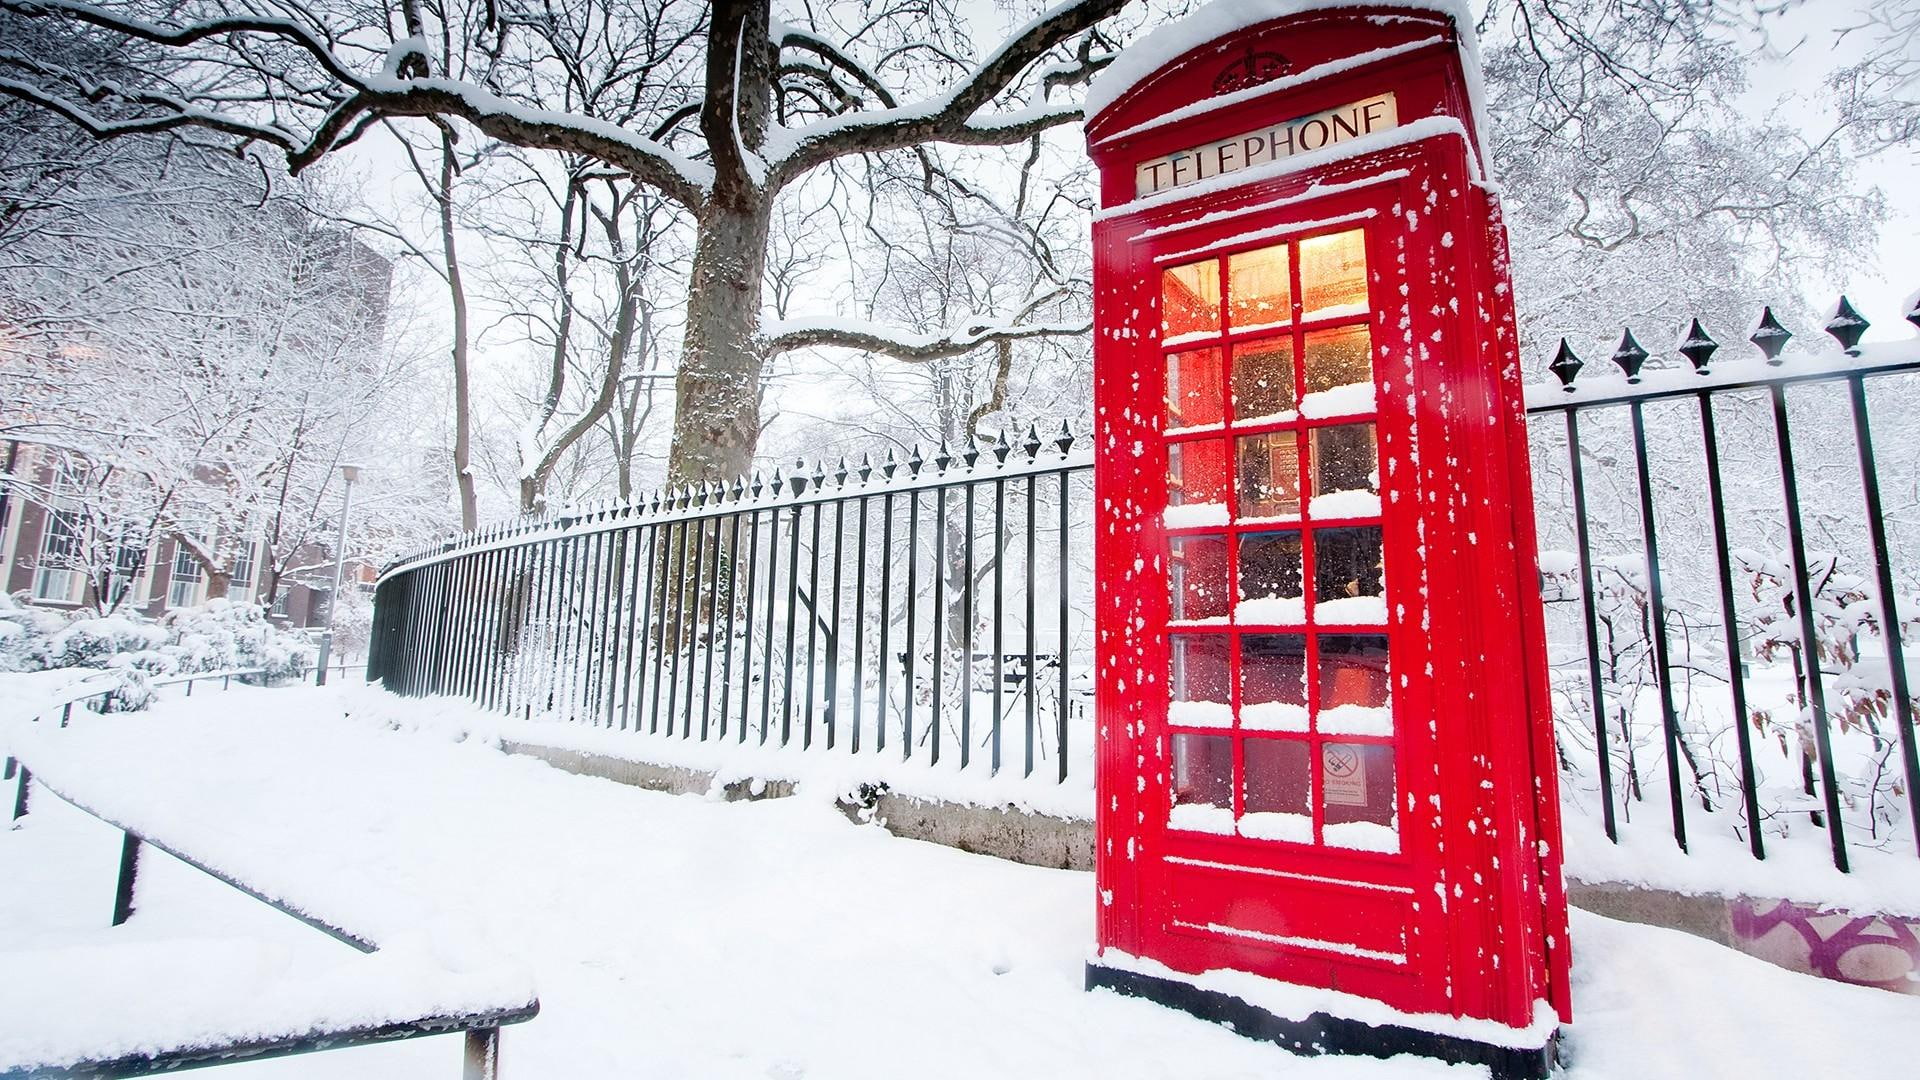 telephone, winter, call box, snow, snowy, snowfall, park, london